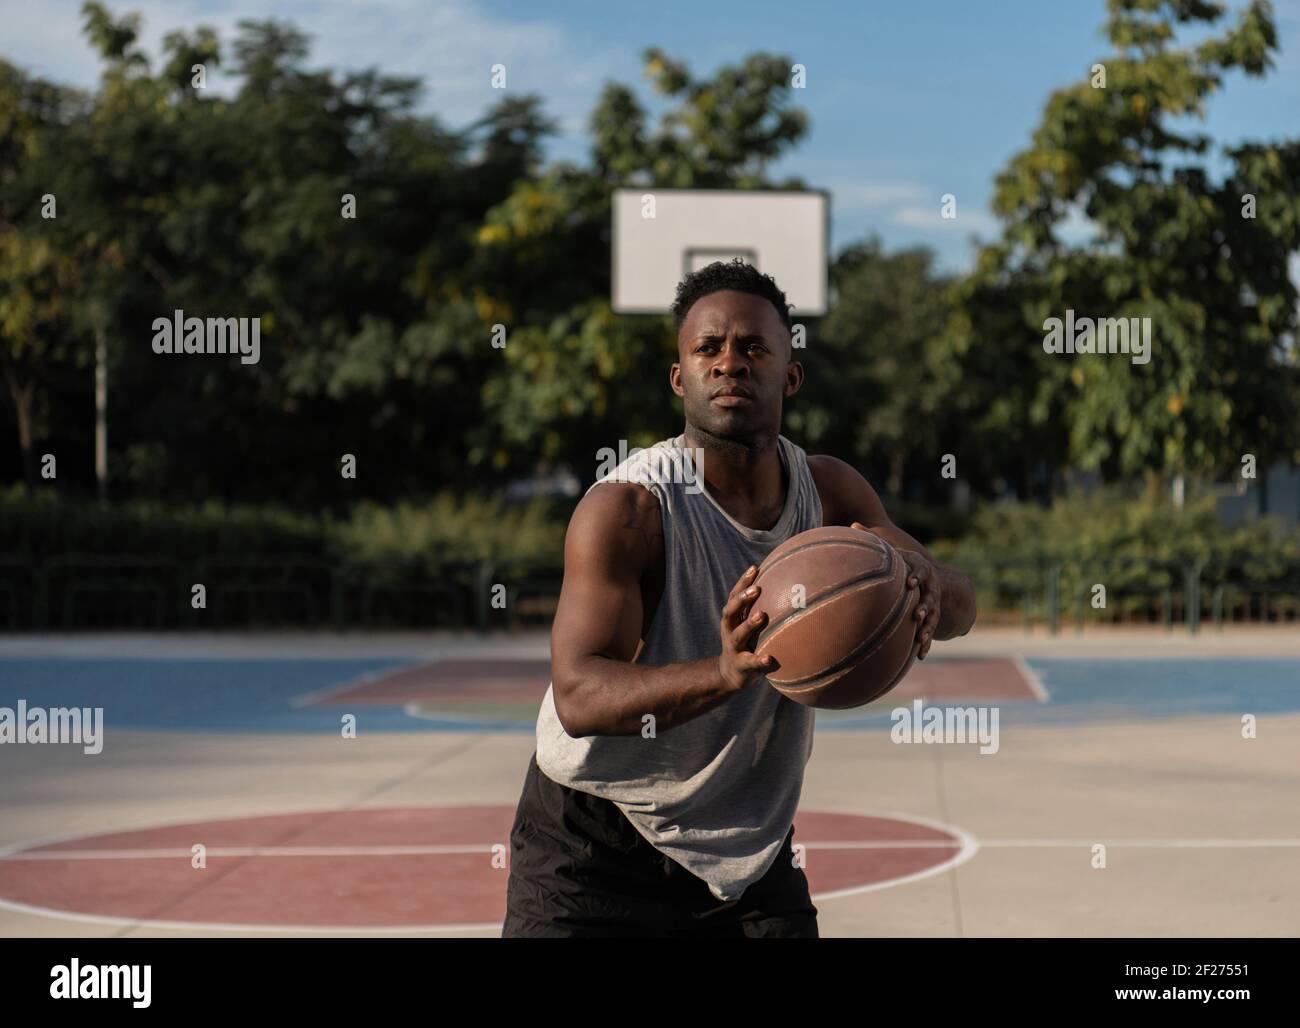 Black basketball player ready to throw ball Stock Photo